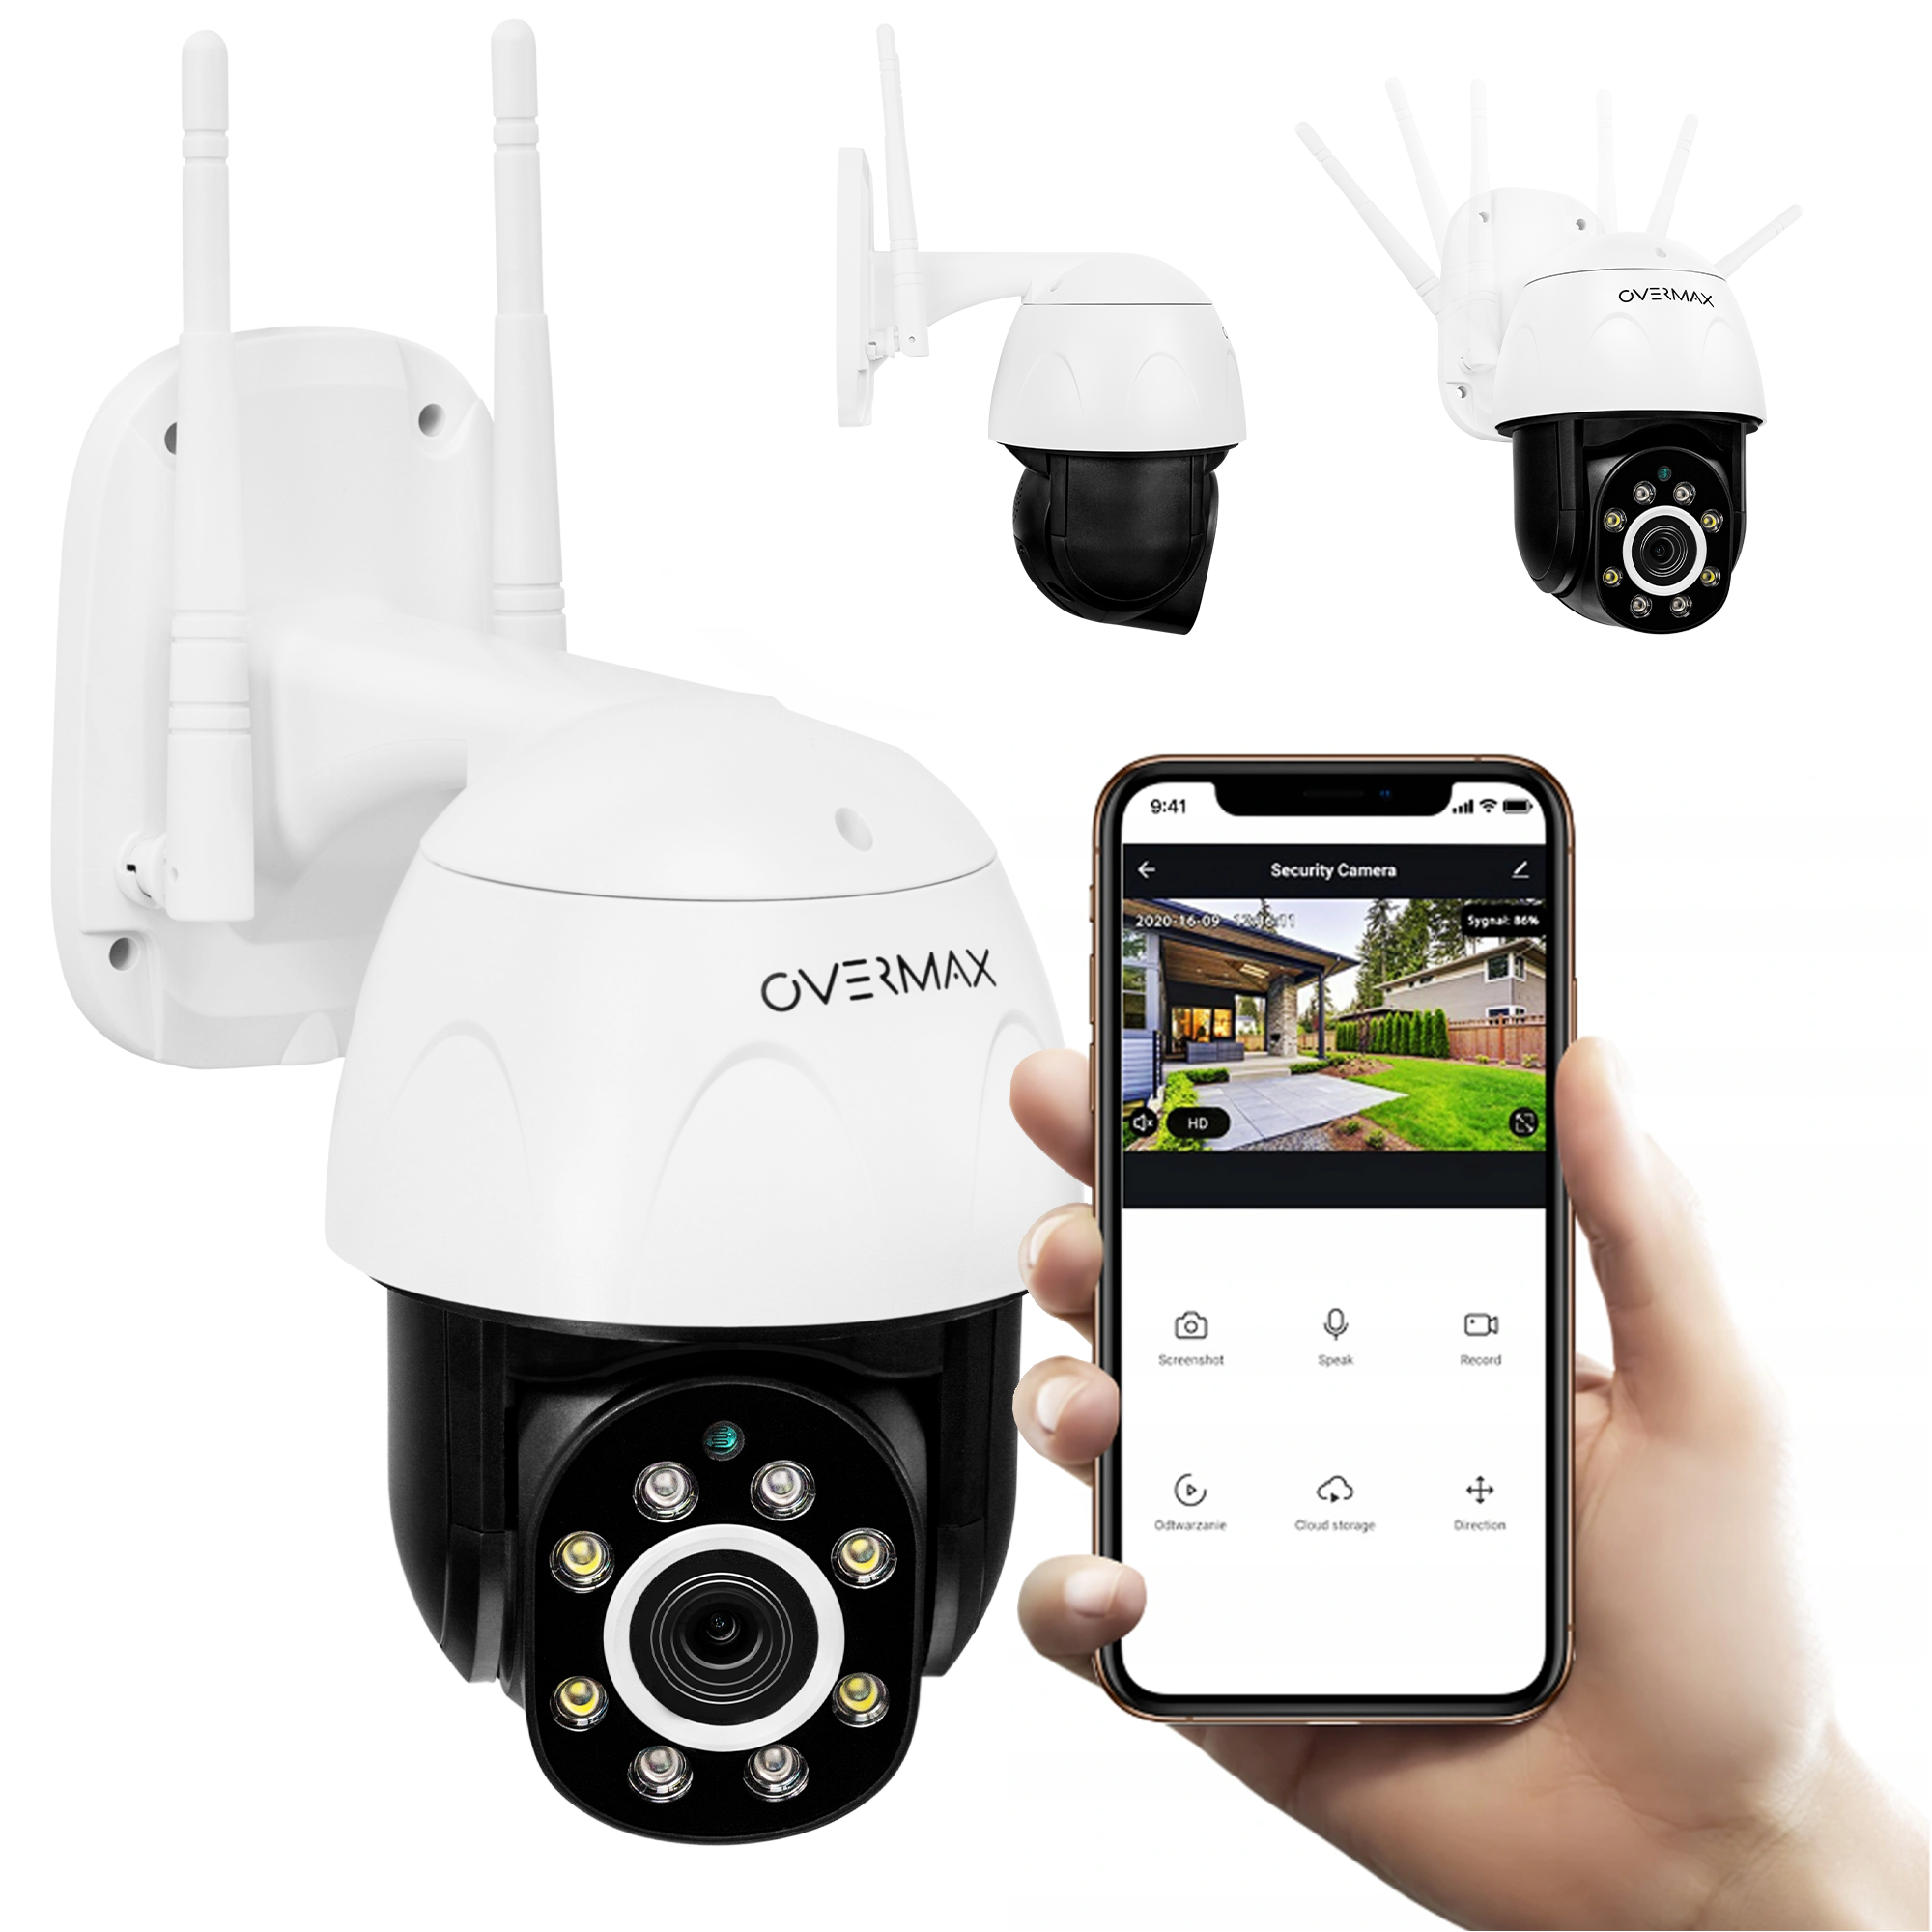 OVERMAX Camspot 4.9 Pro, Auflösung x Überwachungskamera, px 2.5K 1288 2288 - Video